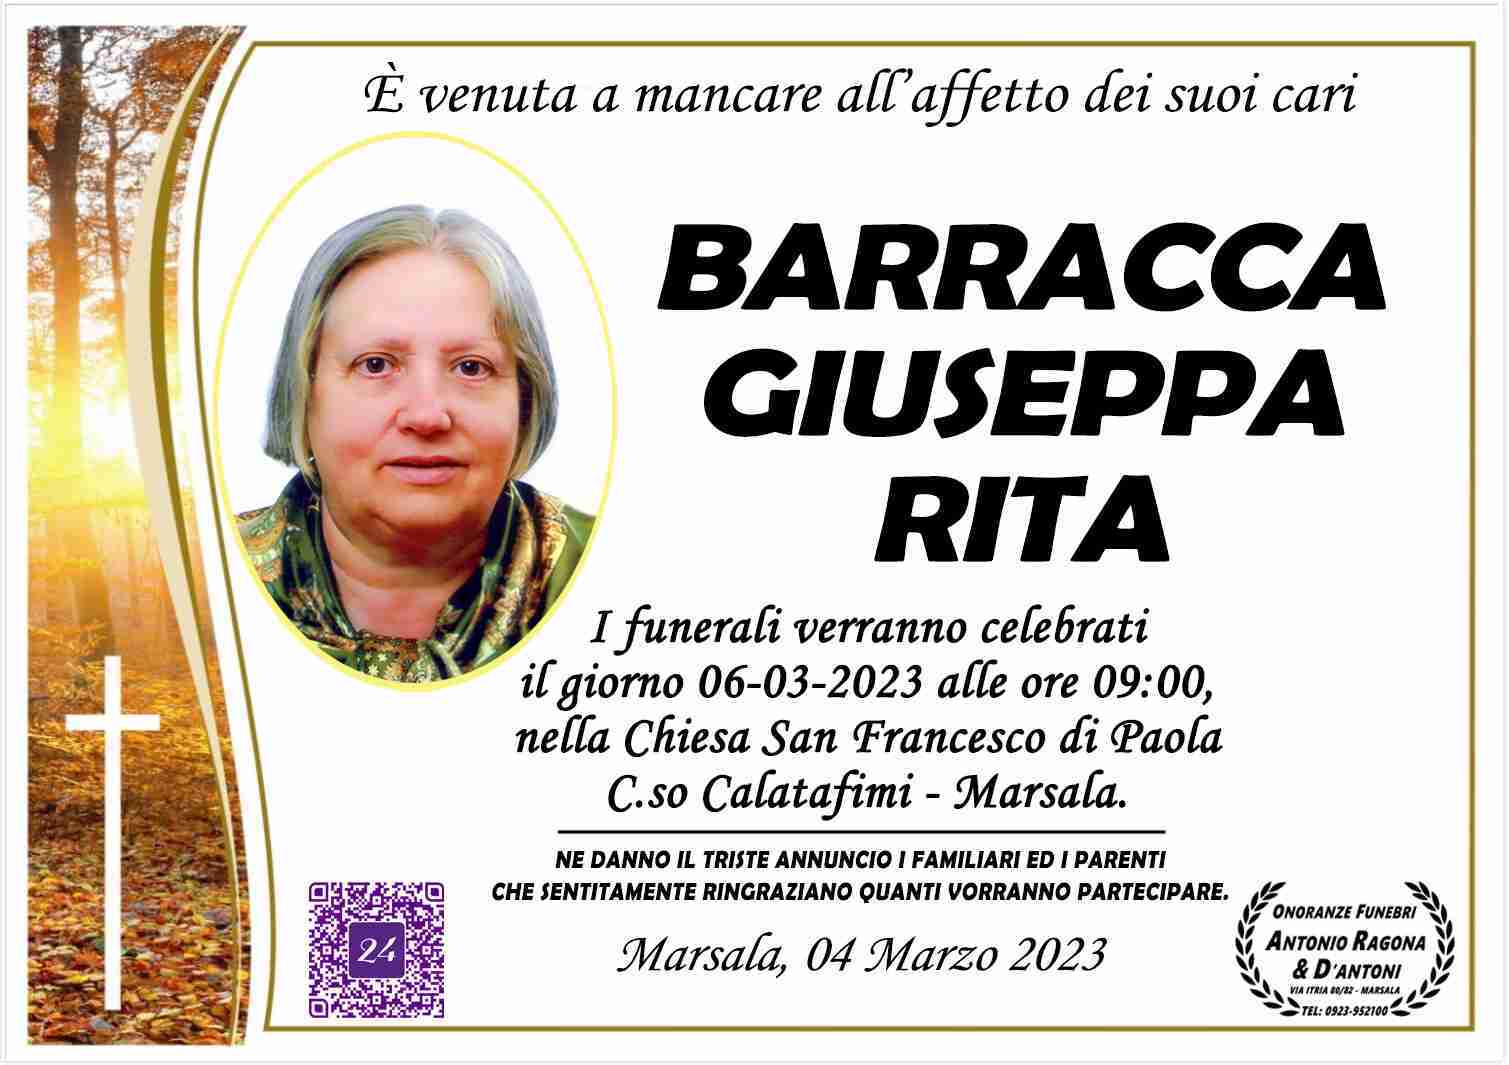 Giuseppa Rita Barracca